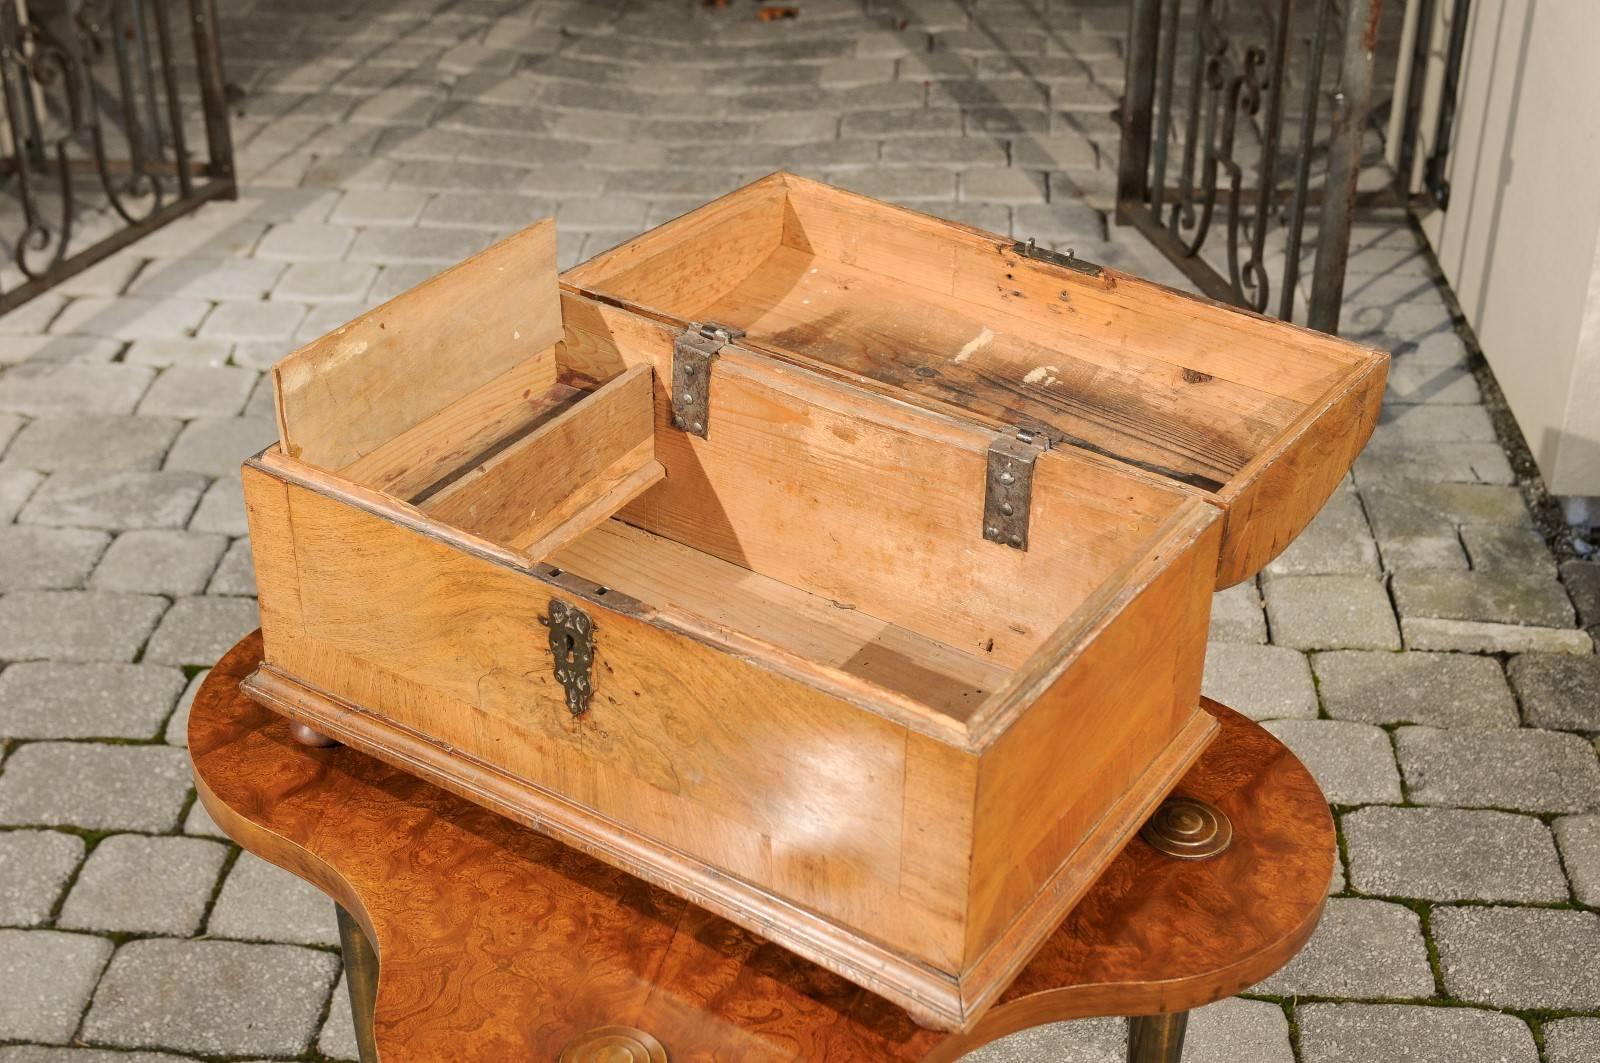 19th Century 1815 Biedermeier Austrian Decorative Box with Arched Lid and Burled Walnut